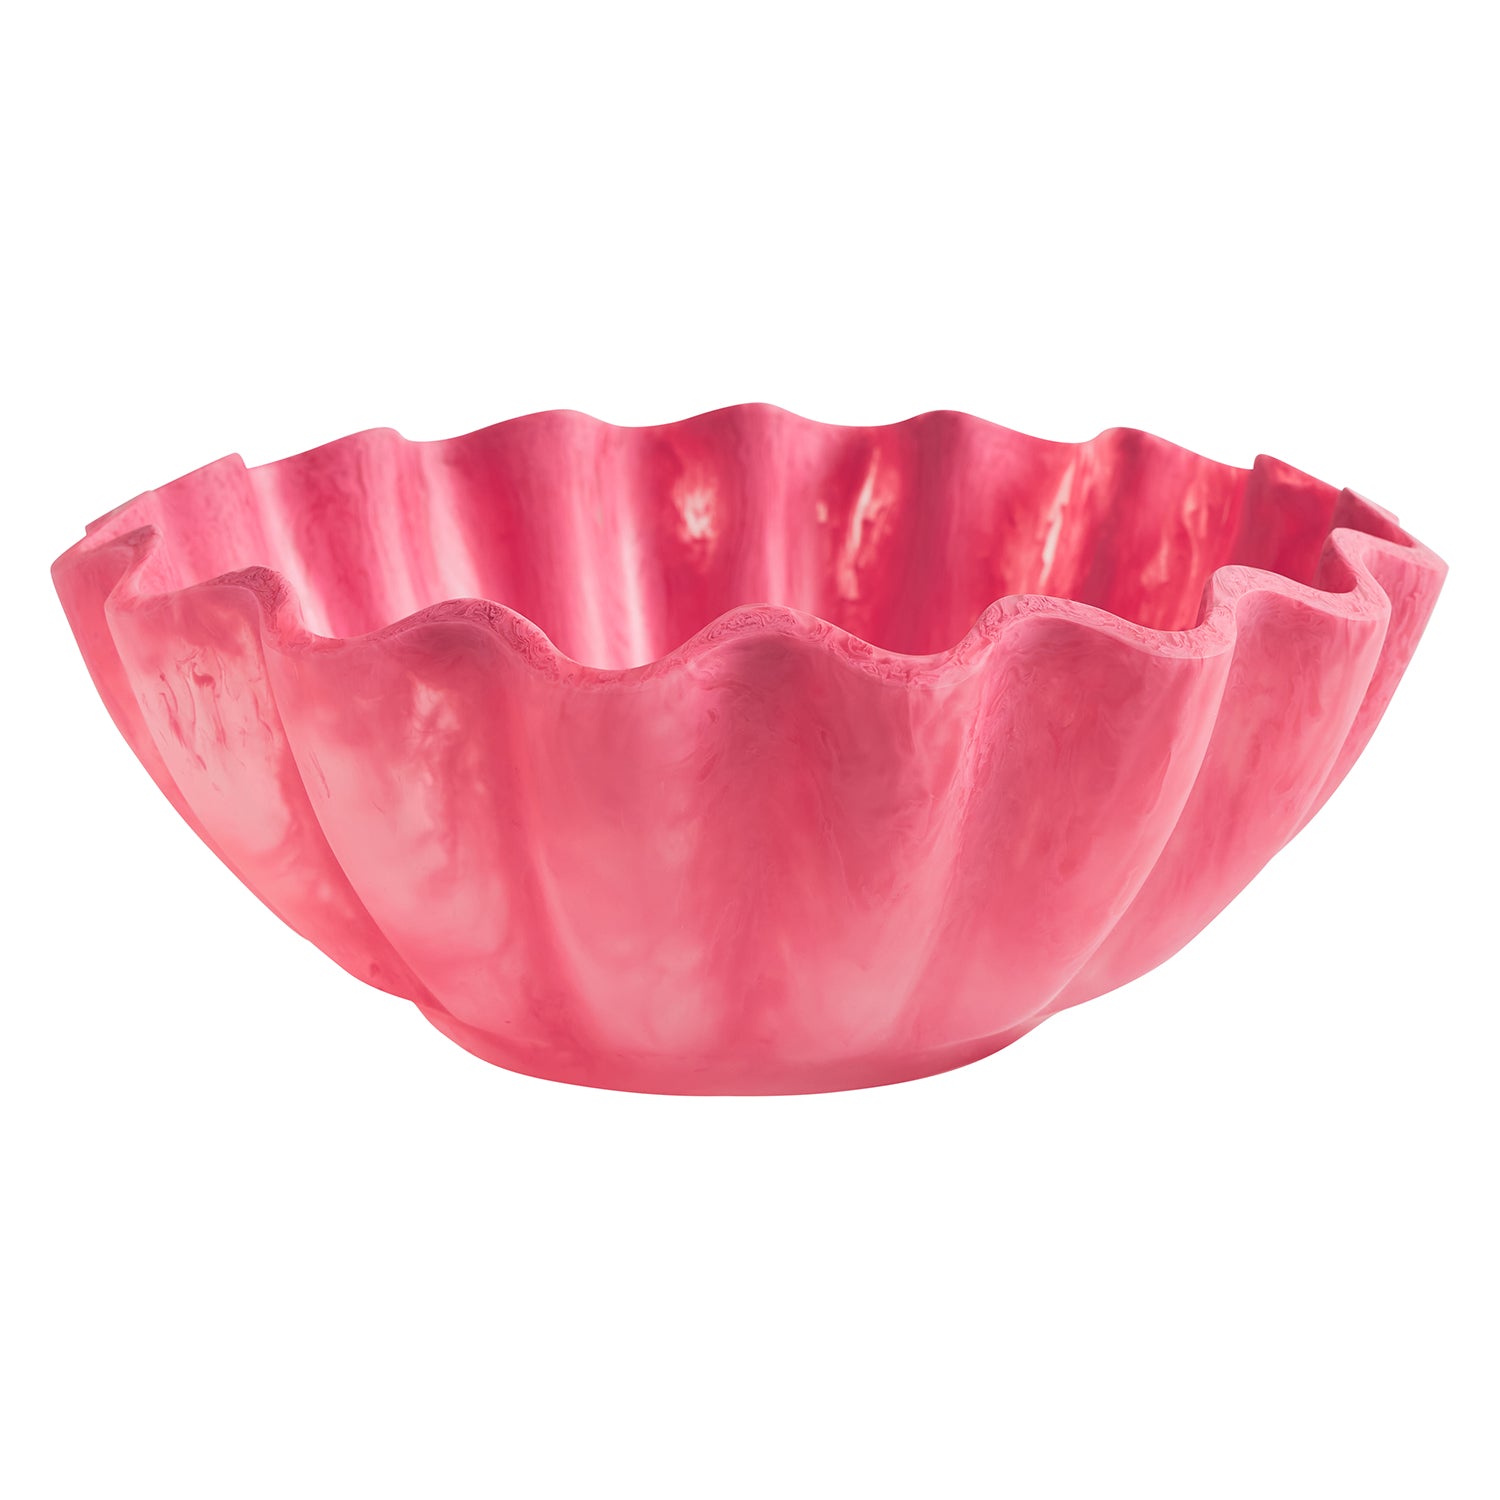 Venus bowl - Plum-Fun-Little Fish Co.